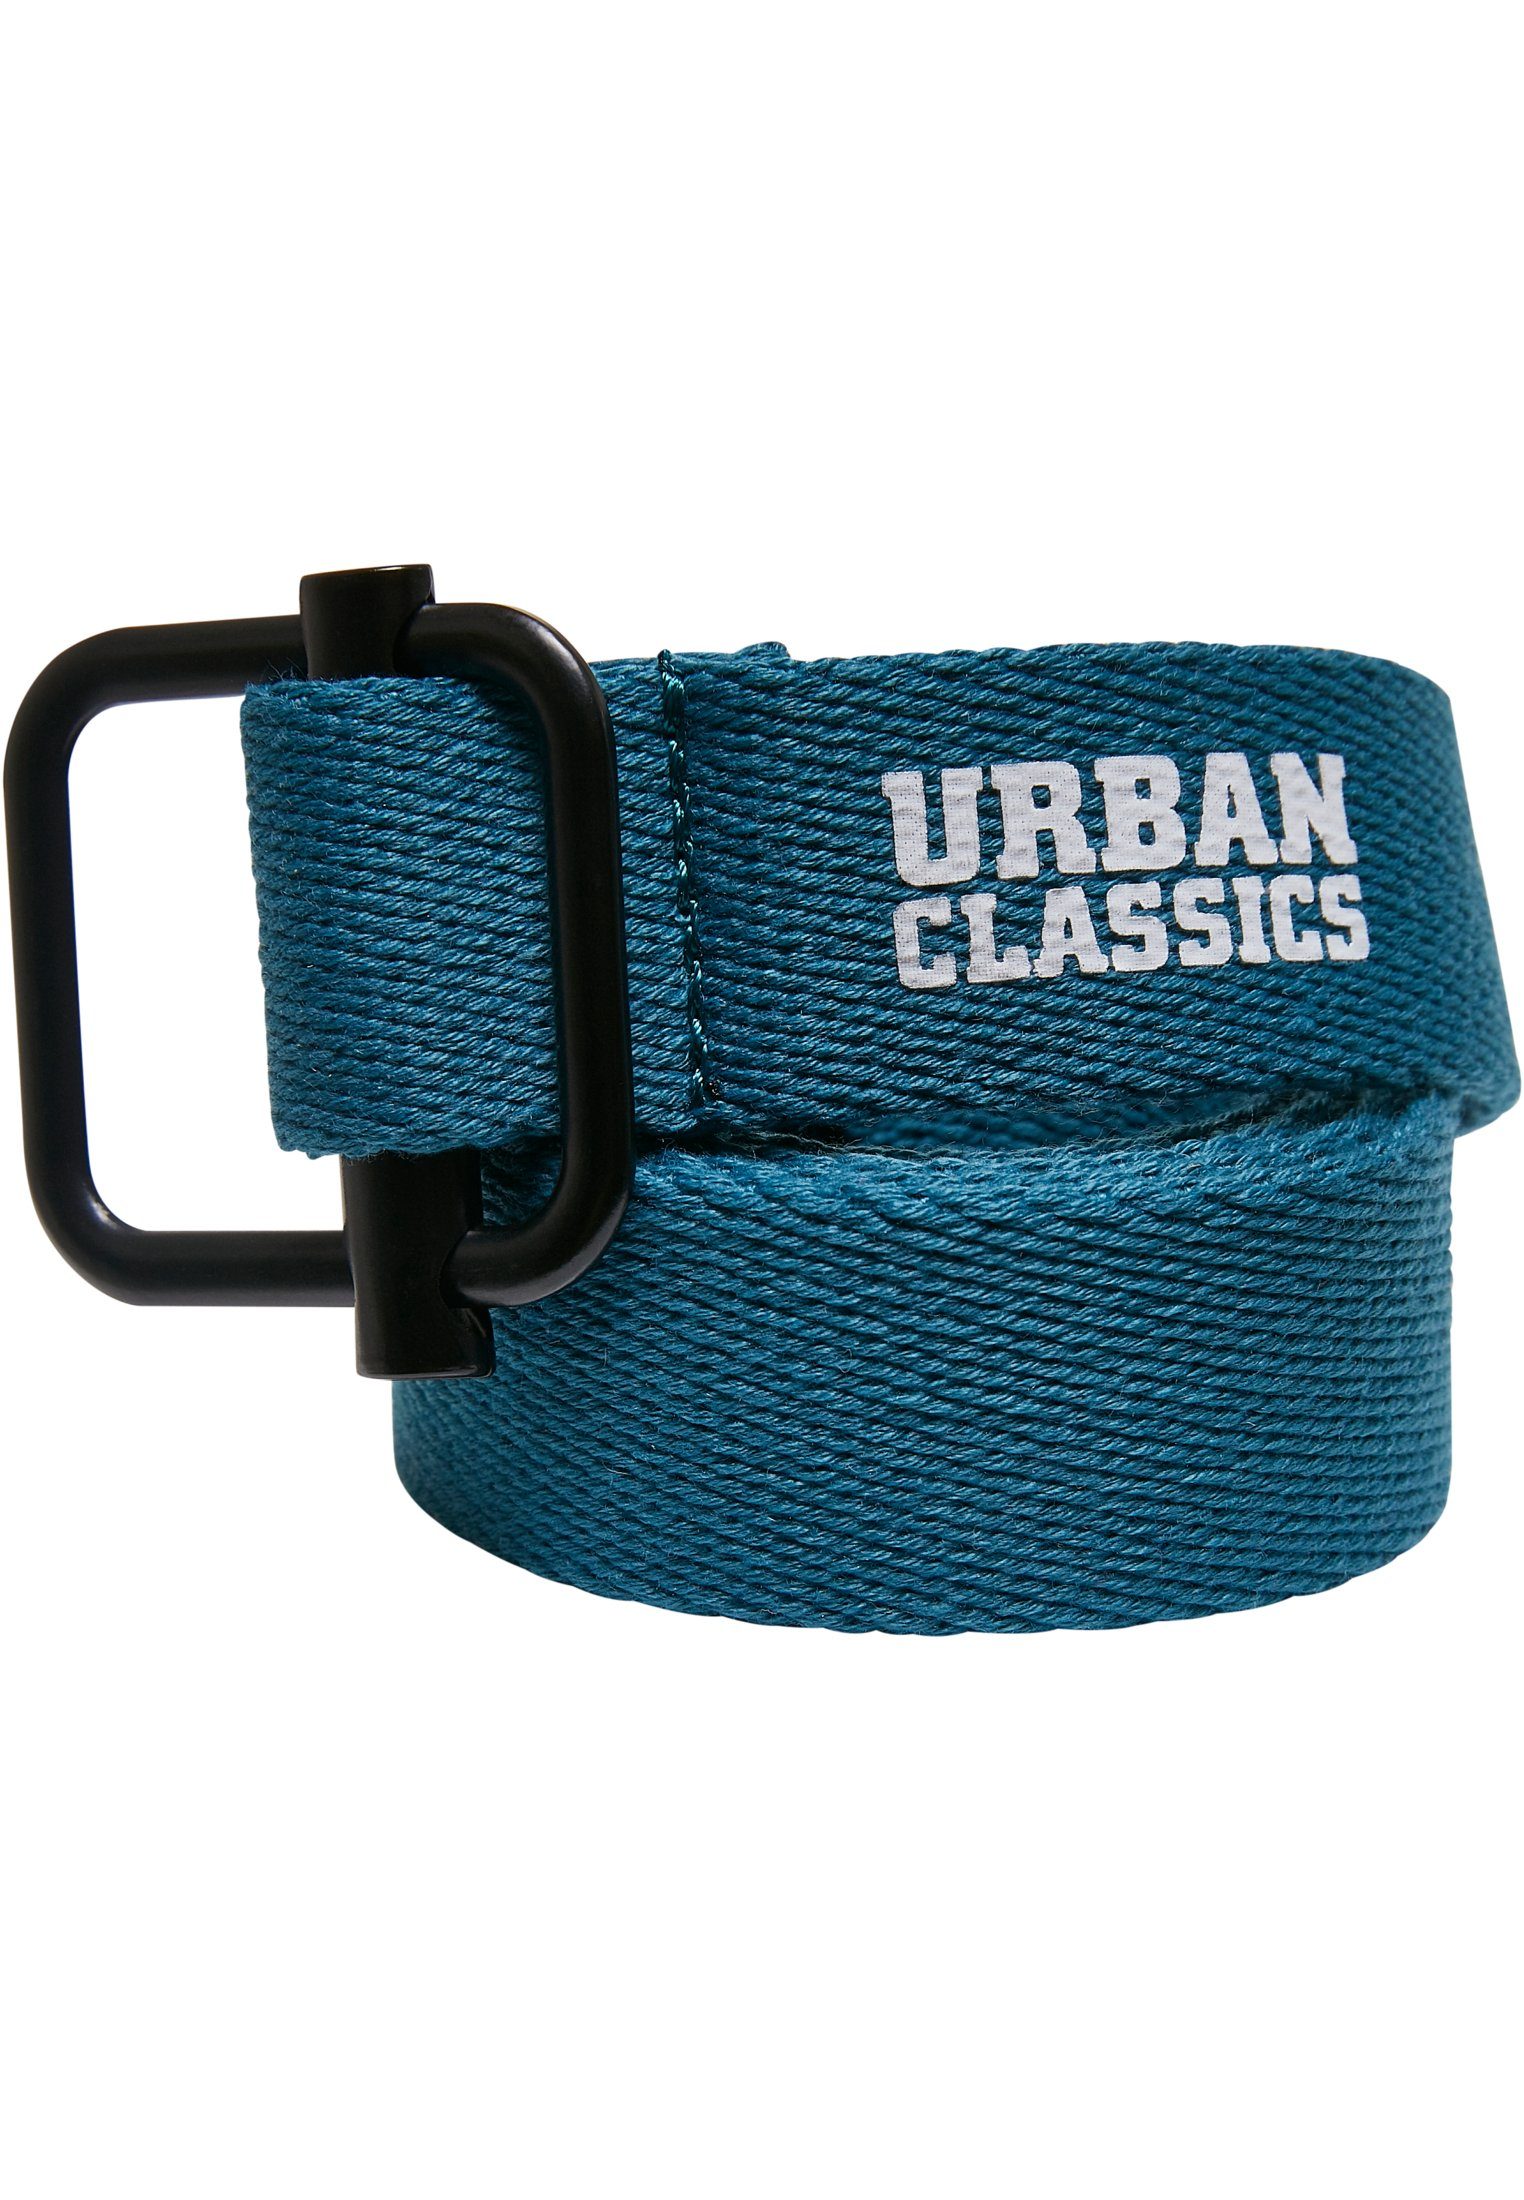 URBAN CLASSICS Hüftgürtel Canvas Belt black-green 2-Pack Accessoires Kids Industrial